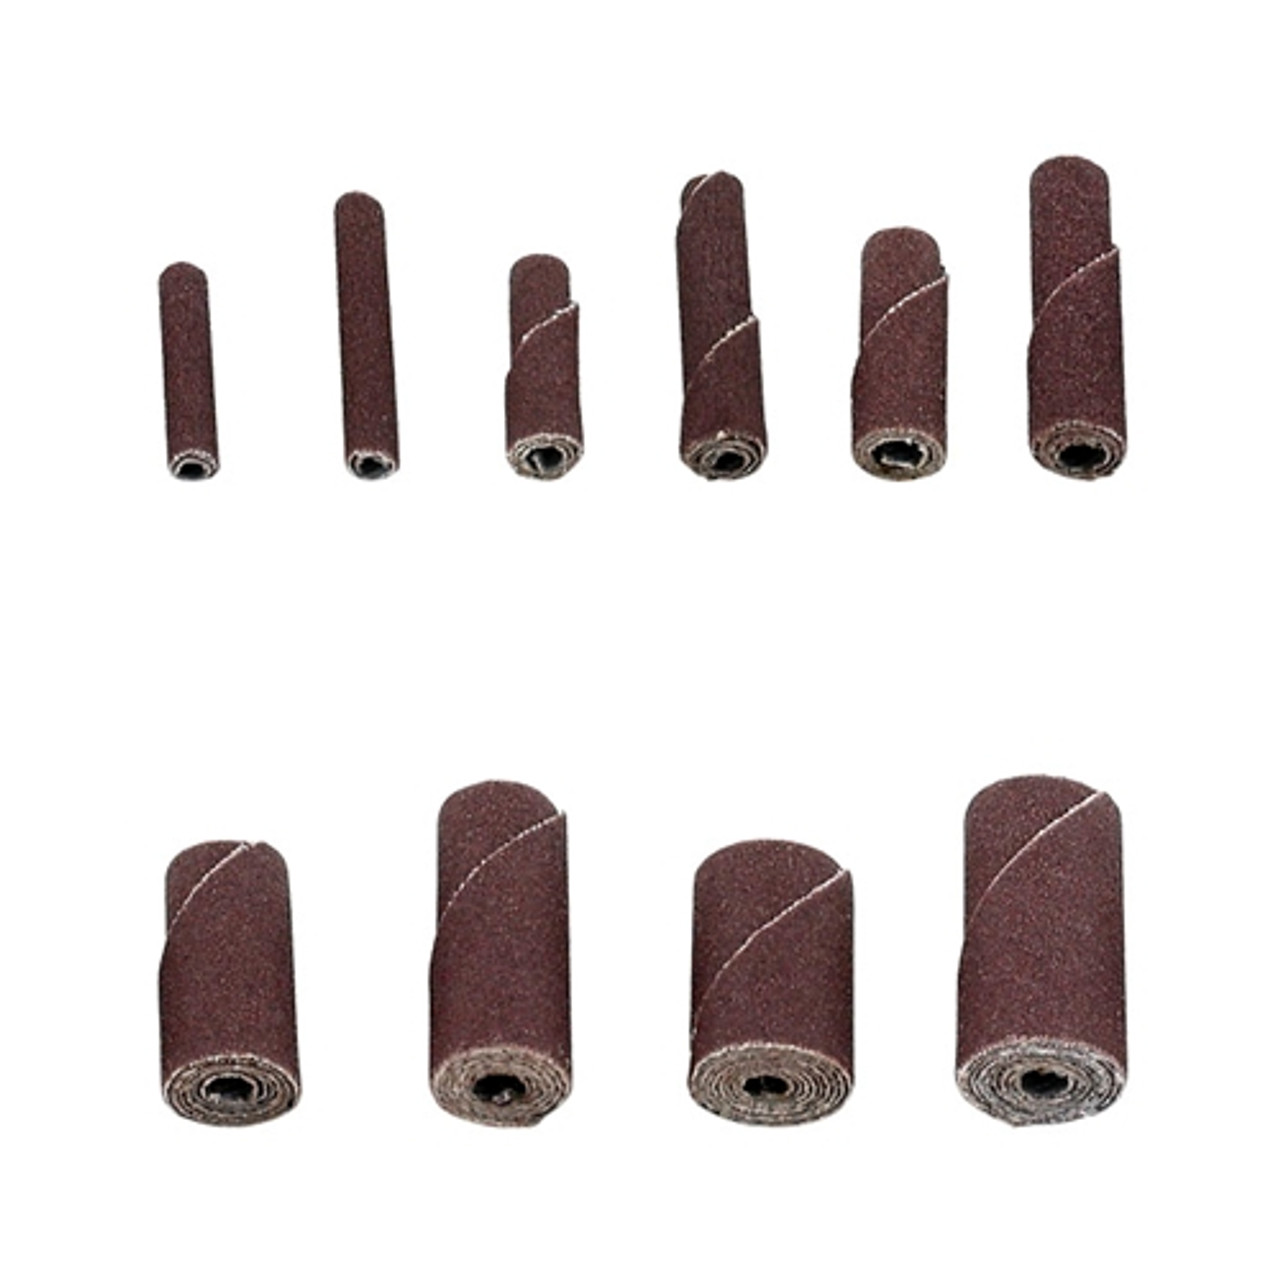 Abrasive Cartridge Rolls - 3/8" x 3/4" x 1/8", 240 Grit